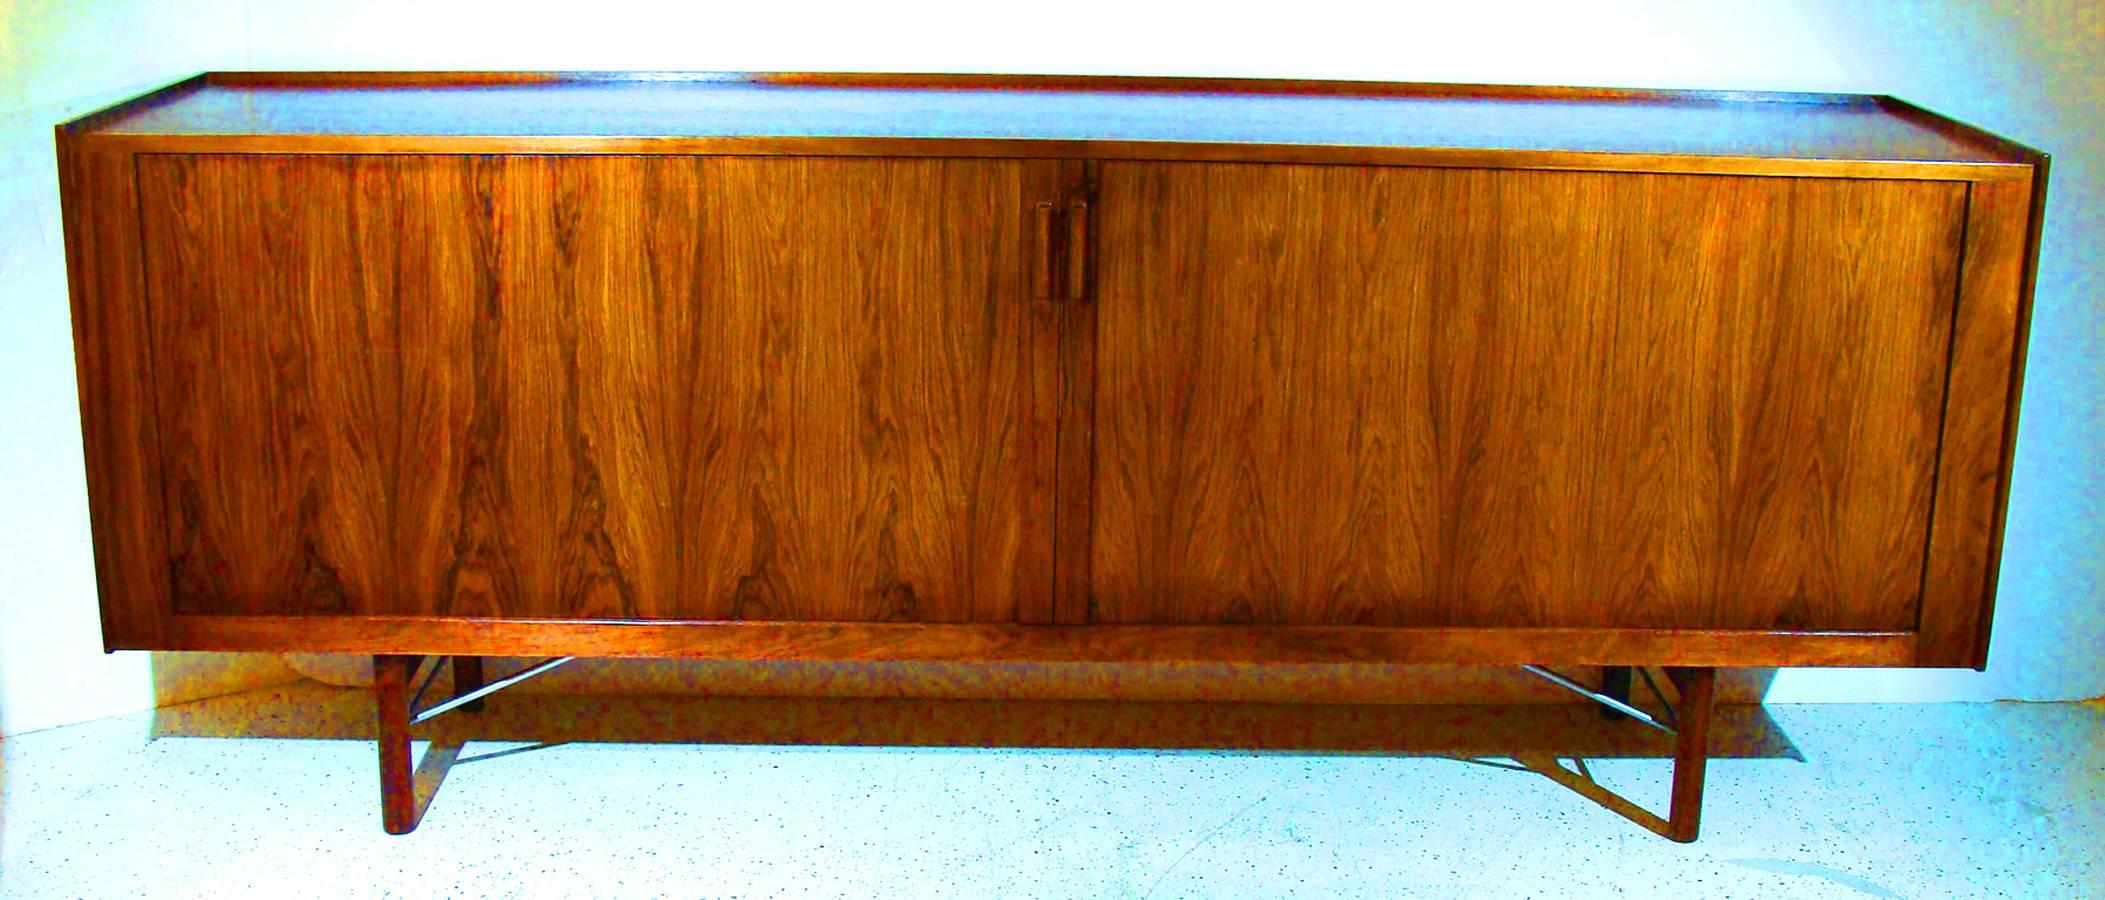 Superb Ib Kofod-Larsen Sideboard in Rosewood For Sale 3